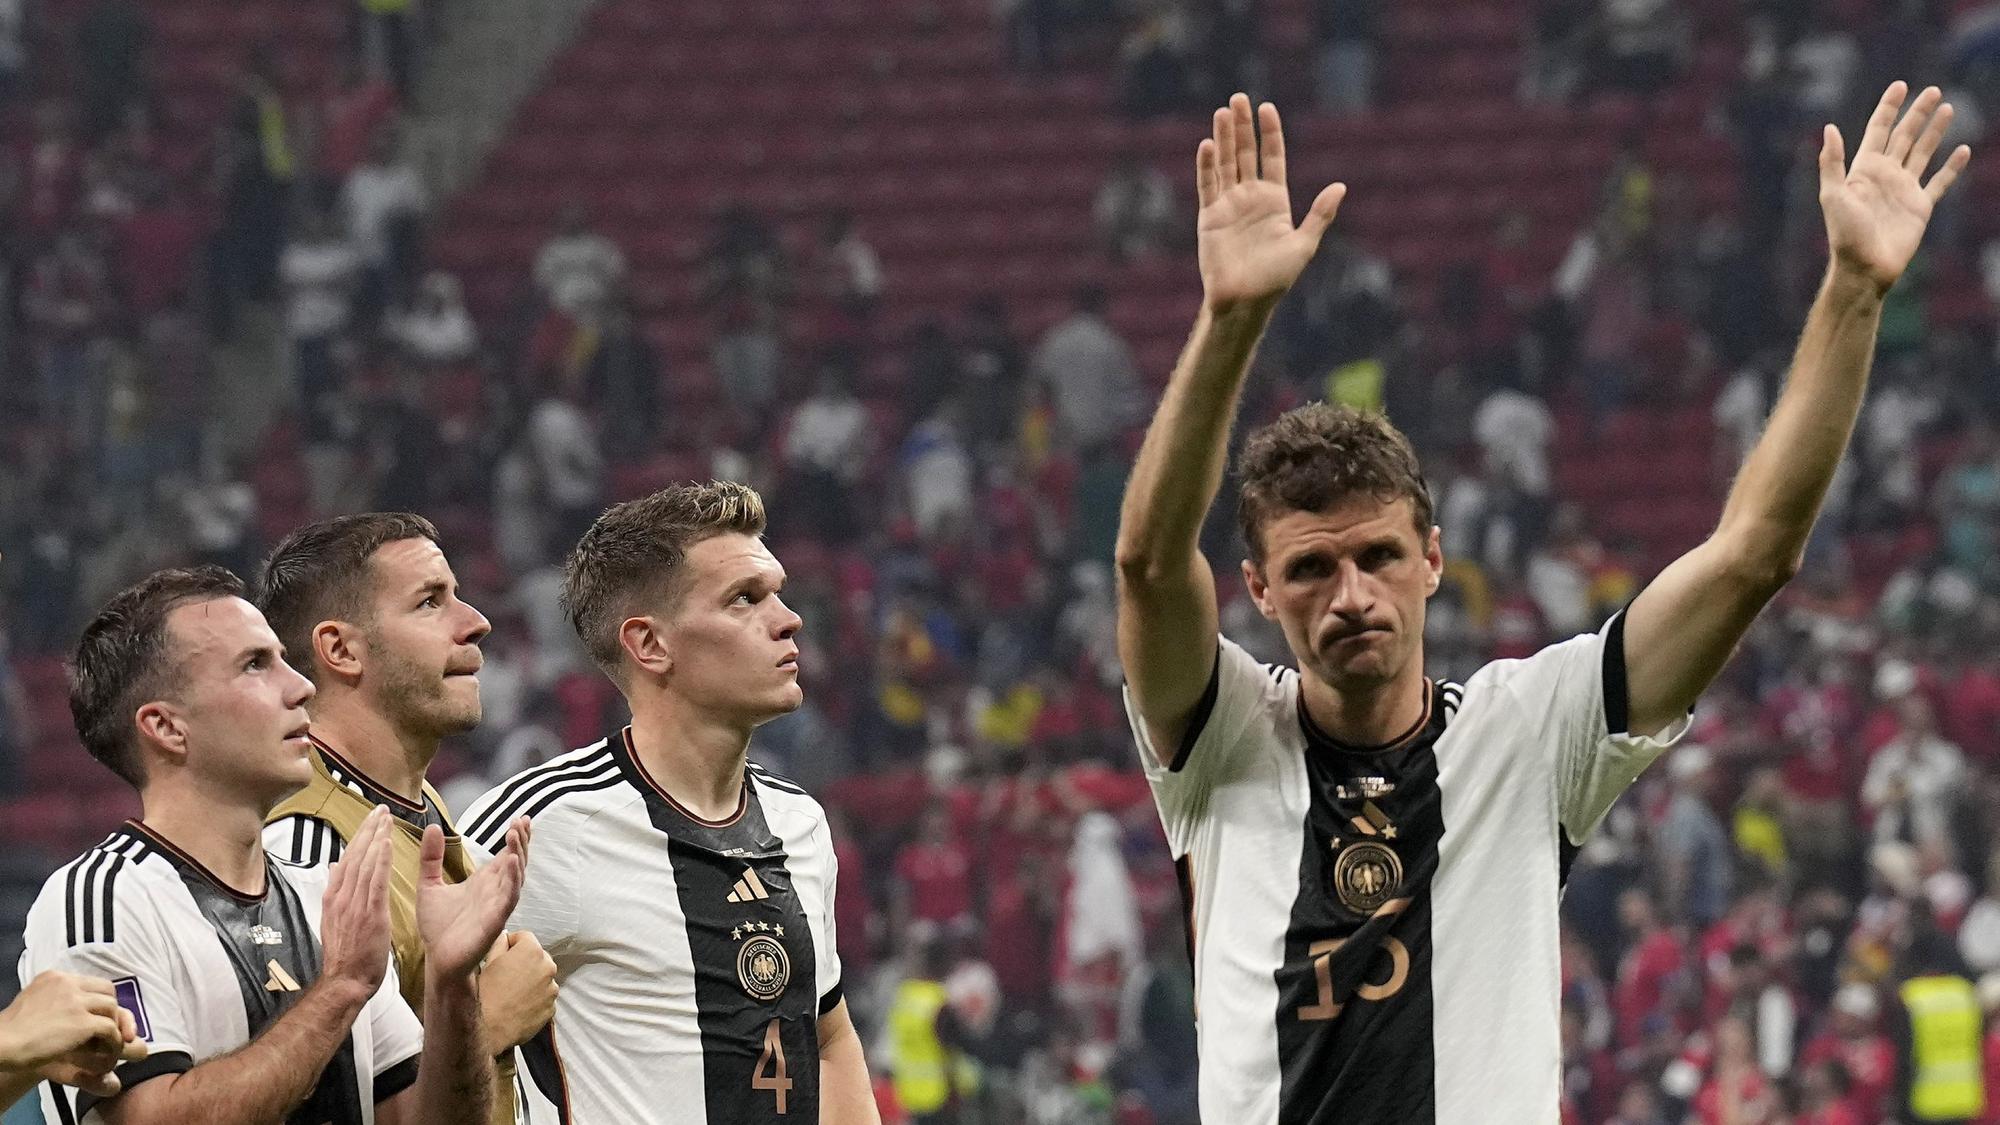 MS vo futbale 2022: Nemci si zaplatili kata. Sme trpaslík, zúfajú | Šport.sk